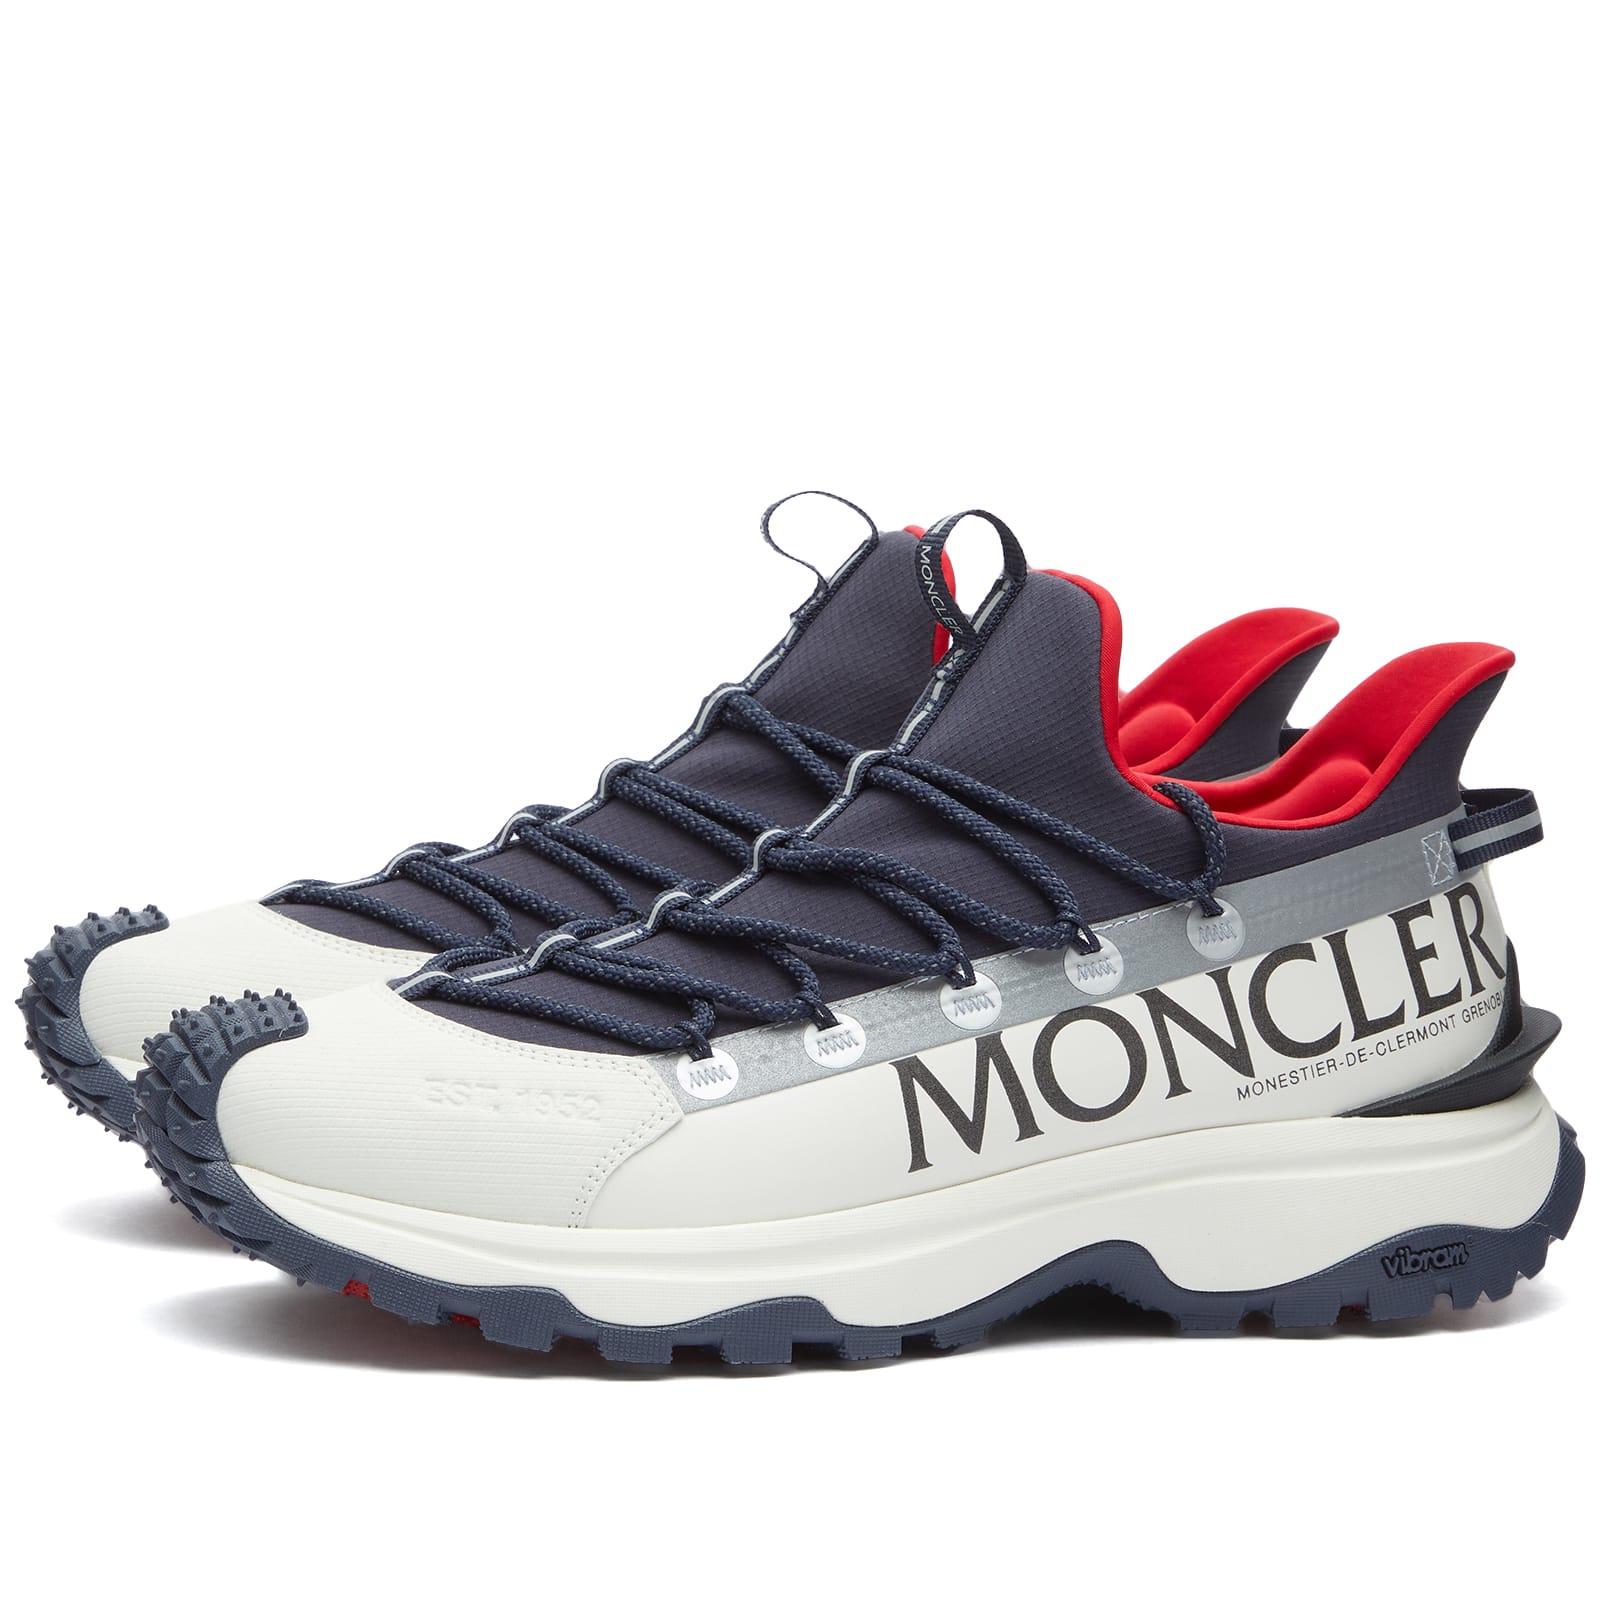 Moncler Trailgrip Sneakers